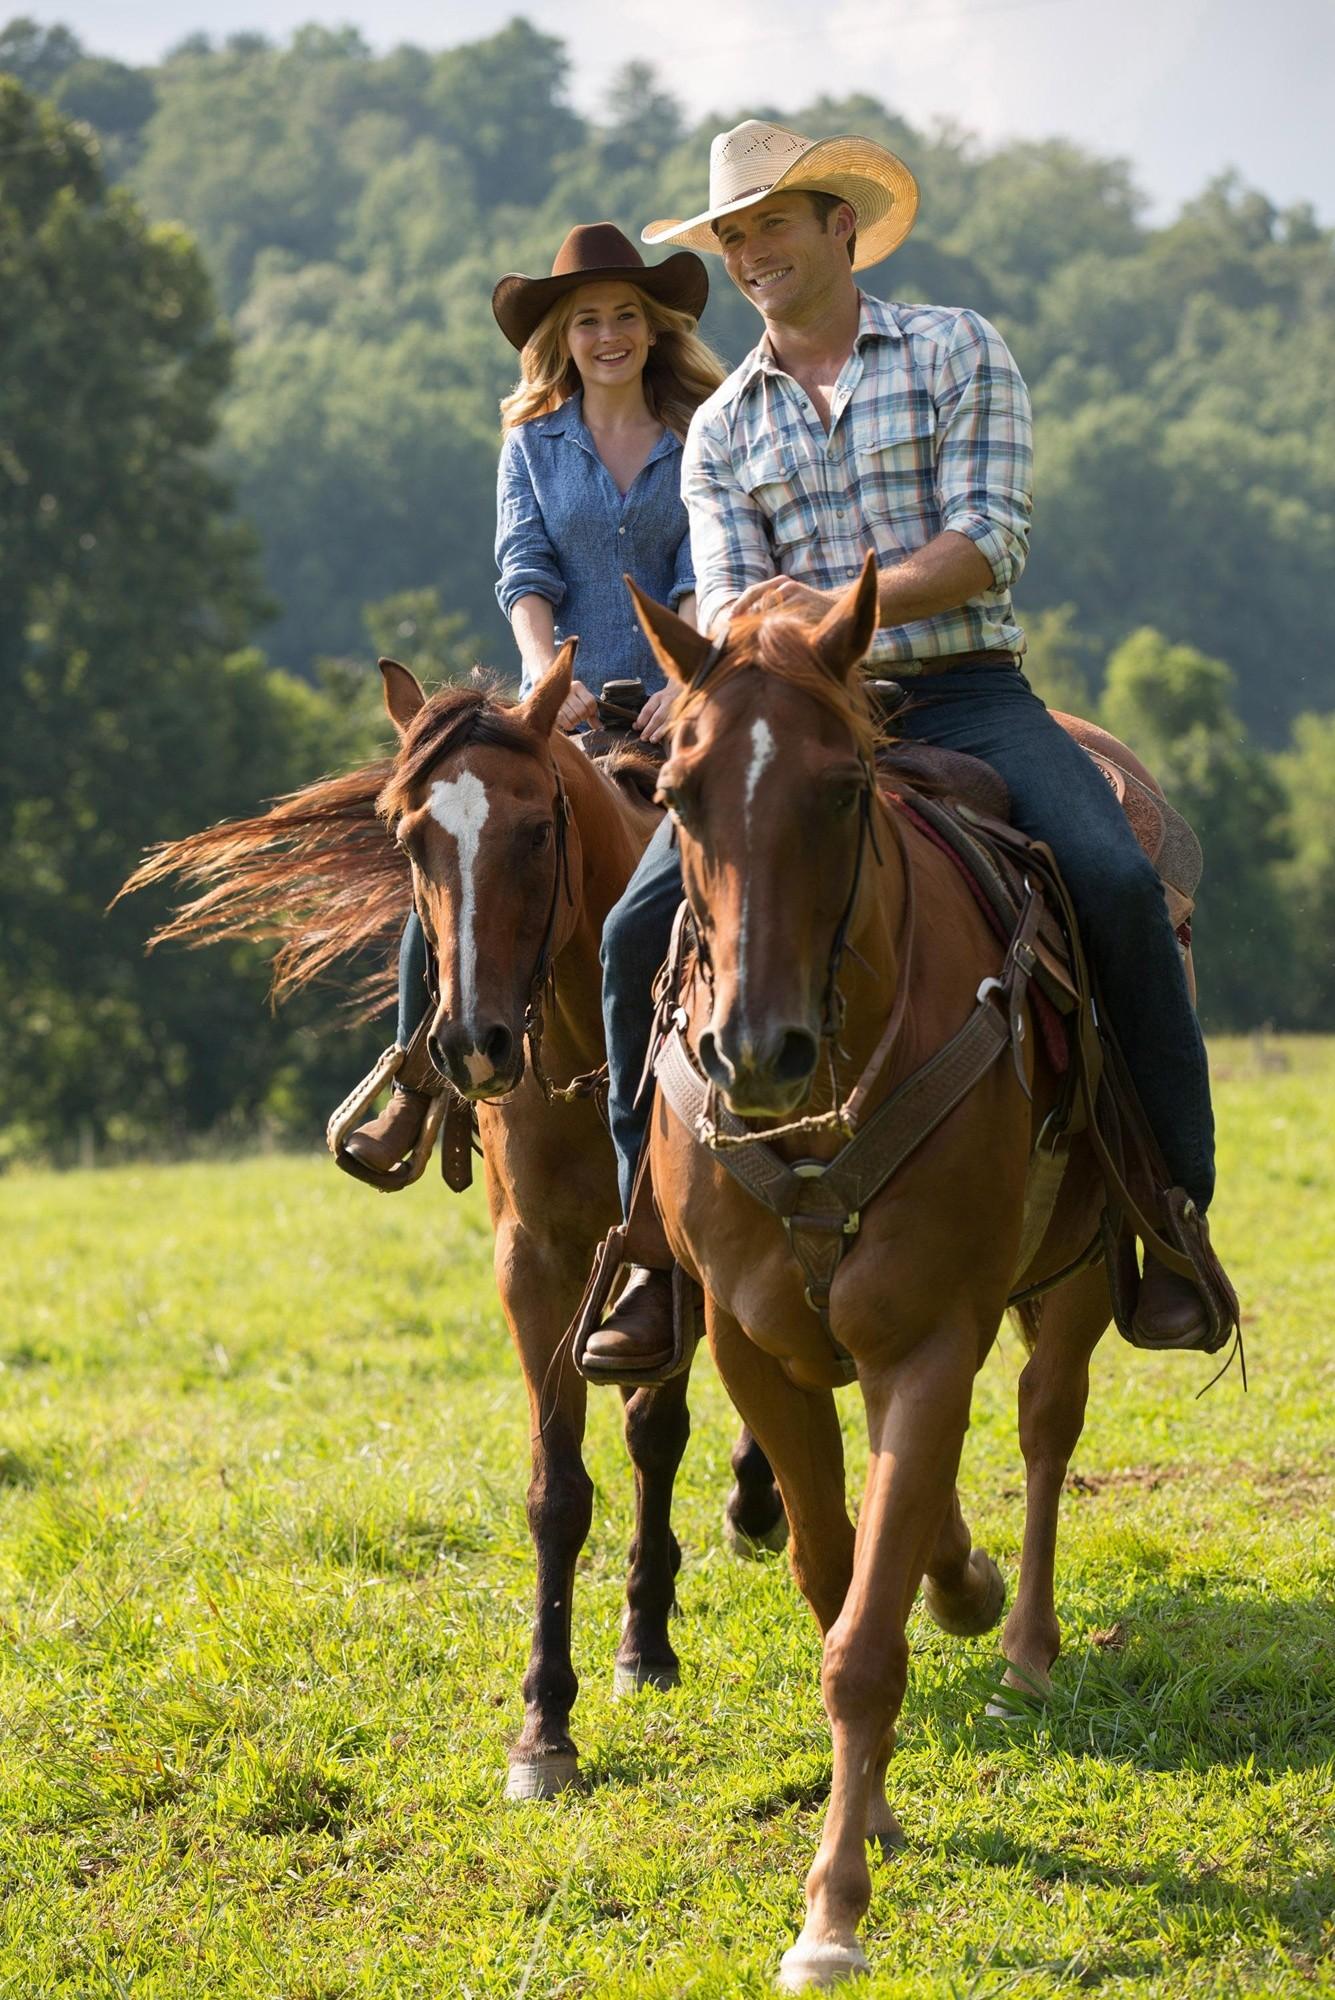 Britt Robertson stars as Sophia Danko and Scott Eastwood stars as Luke Collins in 20th Century Fox's The Longest Ride (2015). Photo credit by Michael Tackett.